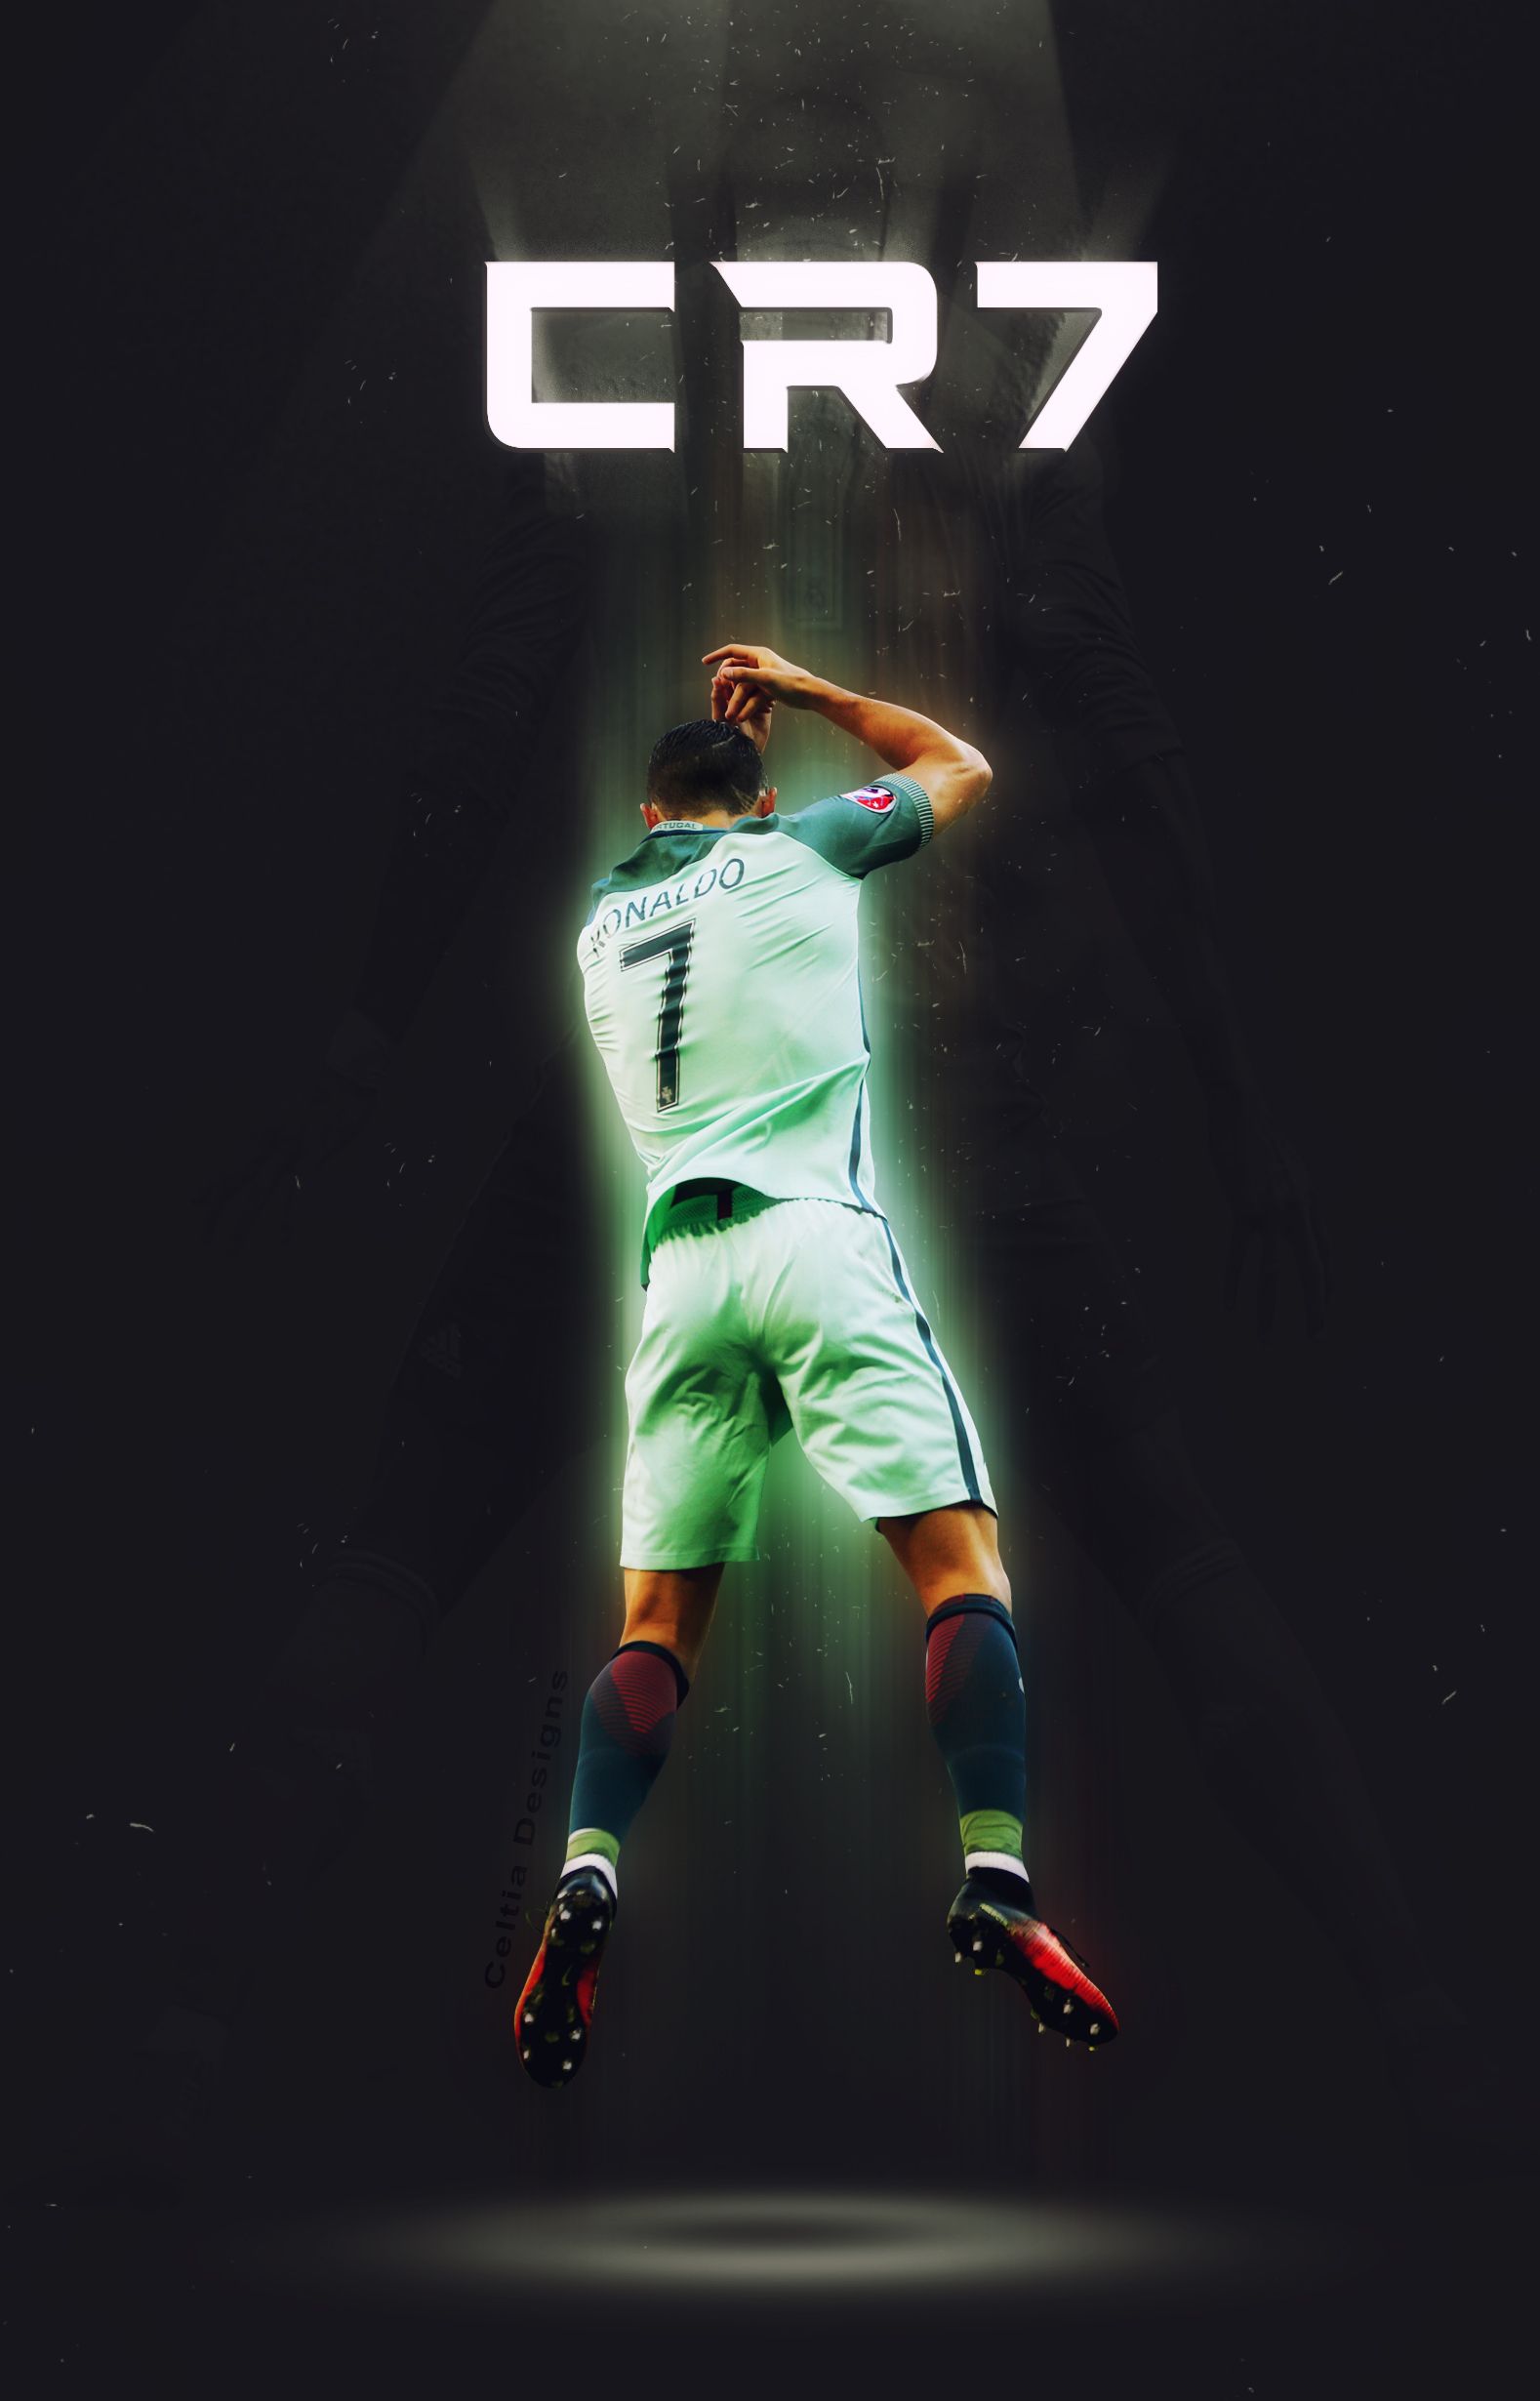 Ronaldo in the Box – A tribute to CR7